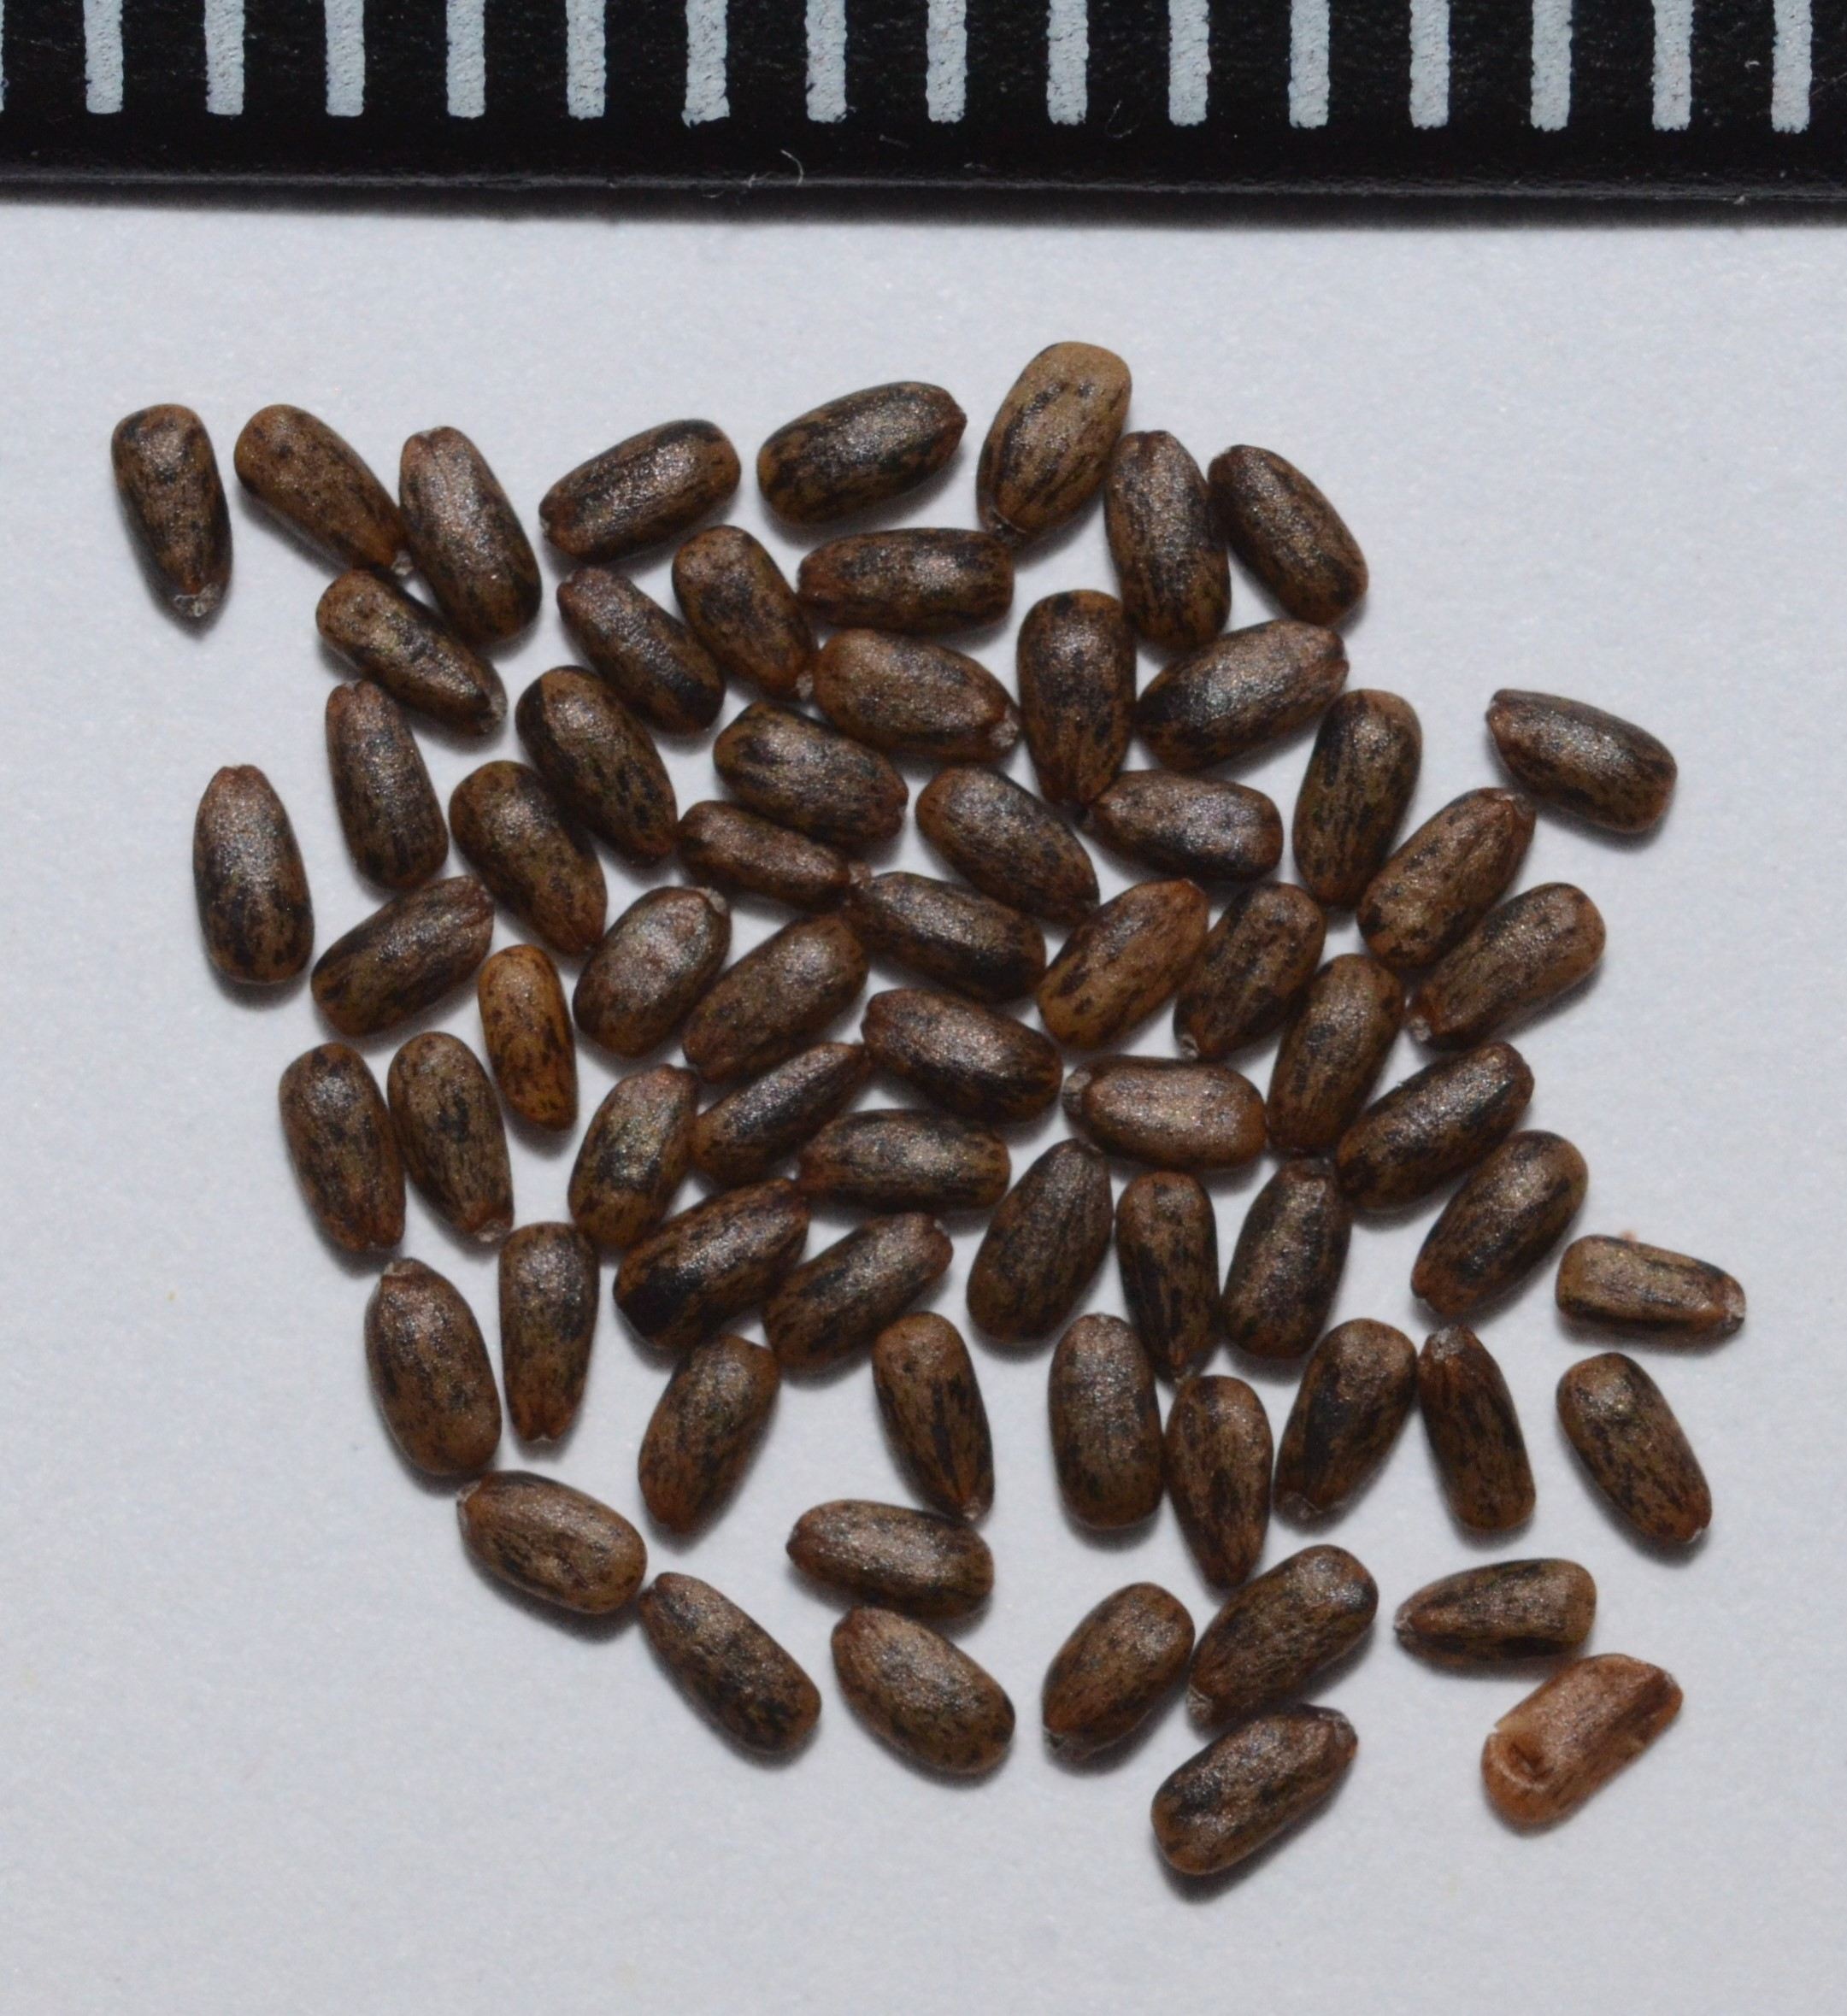 Monardella odoratissima seeds with mm ruler on top.